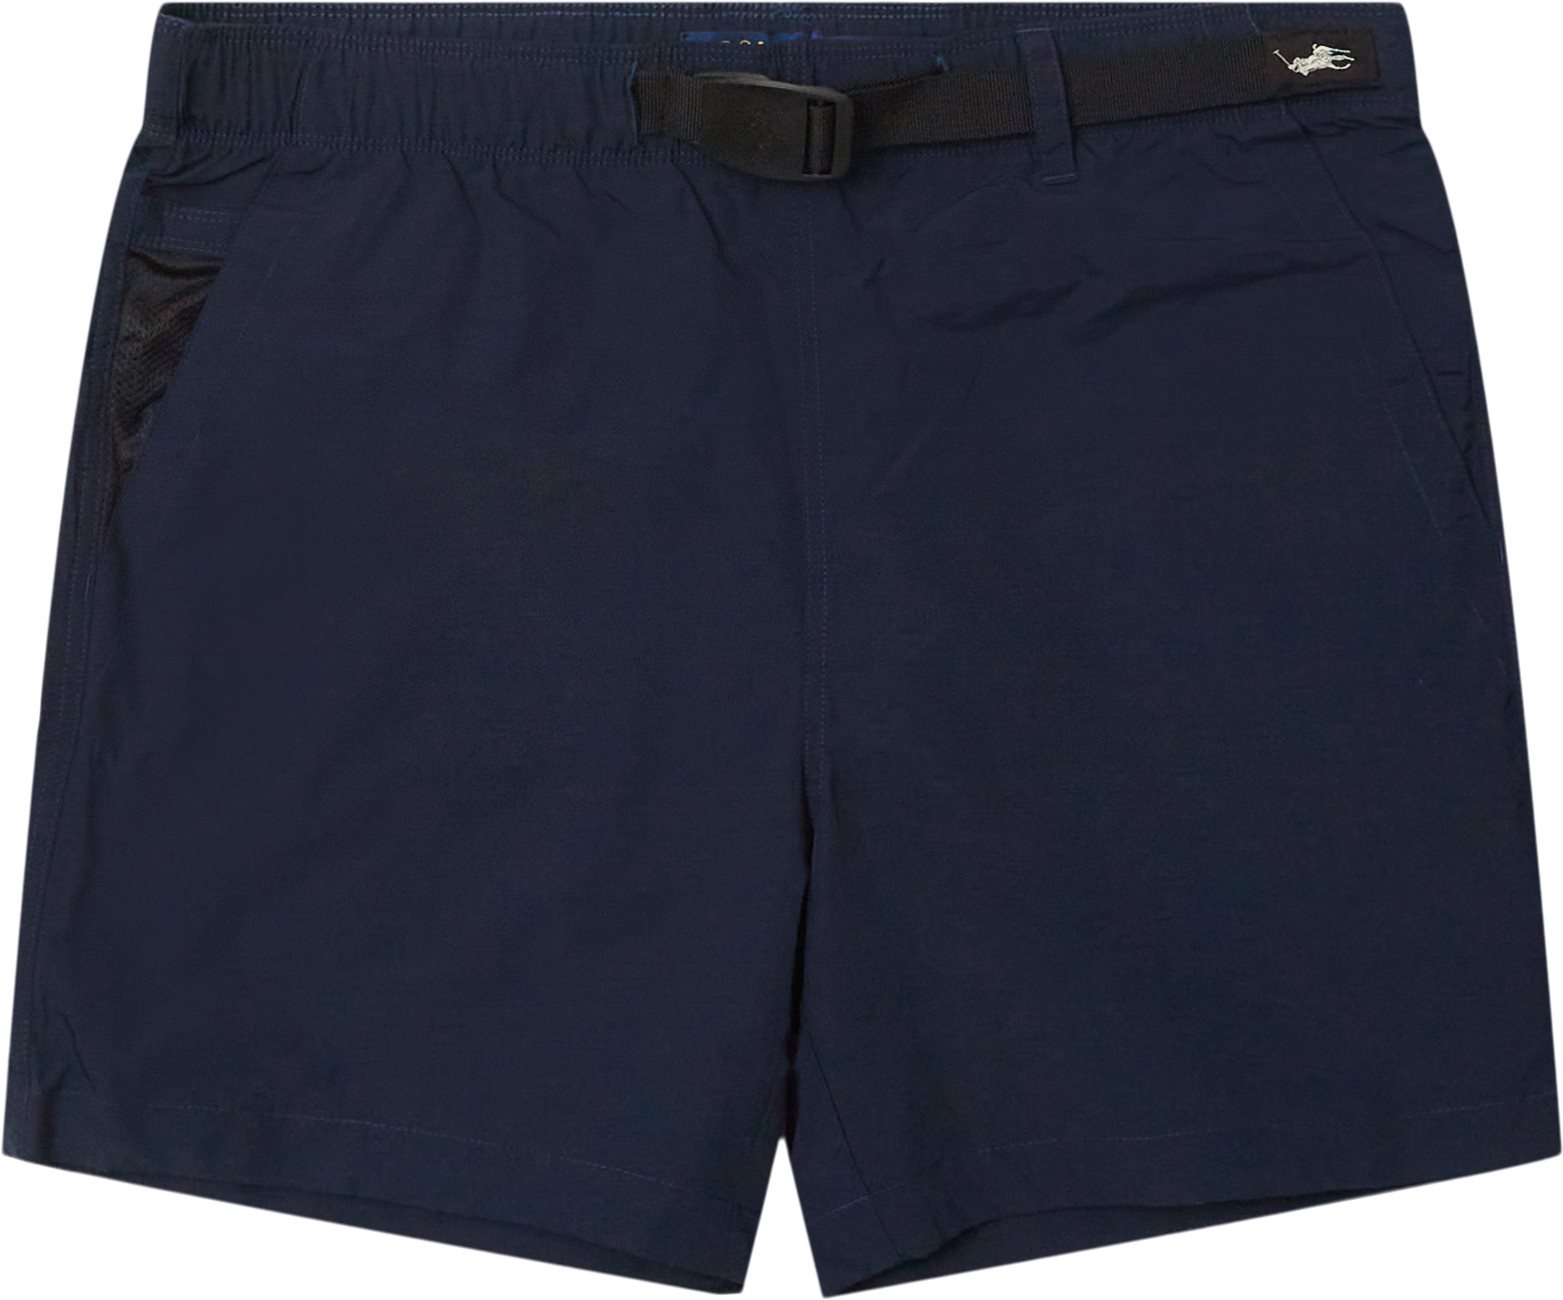 710843137 Comfort shorts - Shorts - Regular fit - Blå